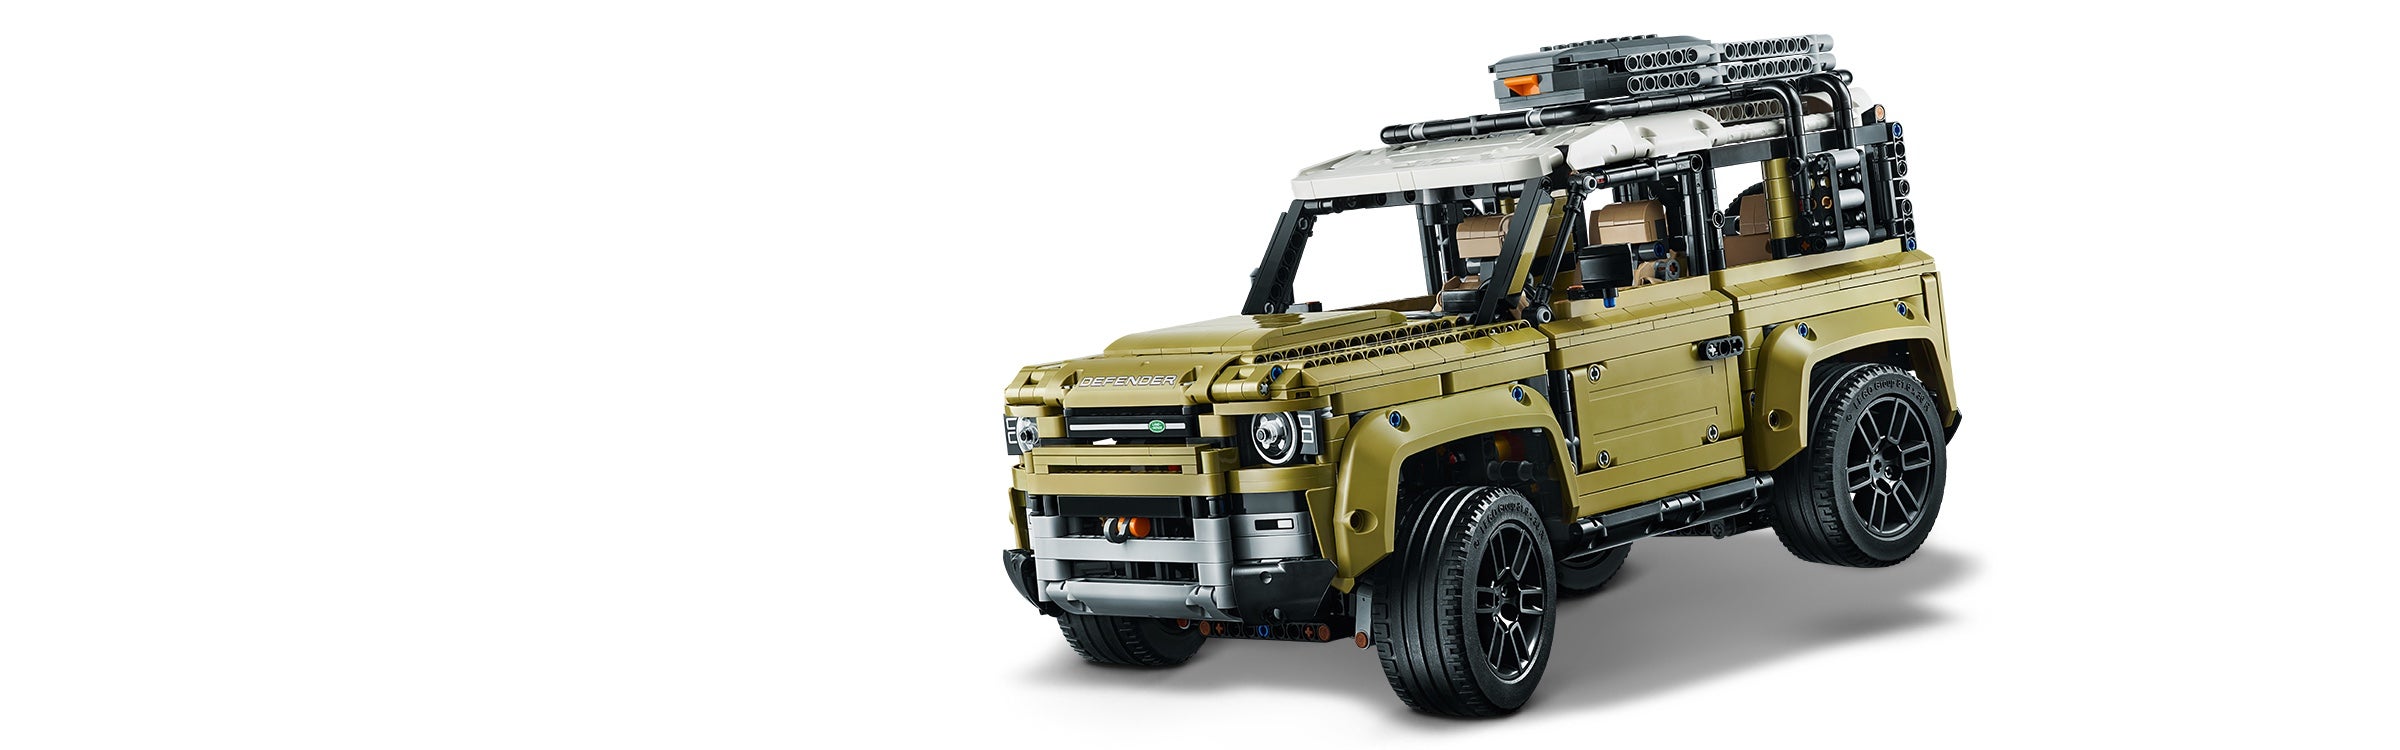 Lego Technic Land Rover Defender Coche Modelo de coleccionista 42110-Nuevo